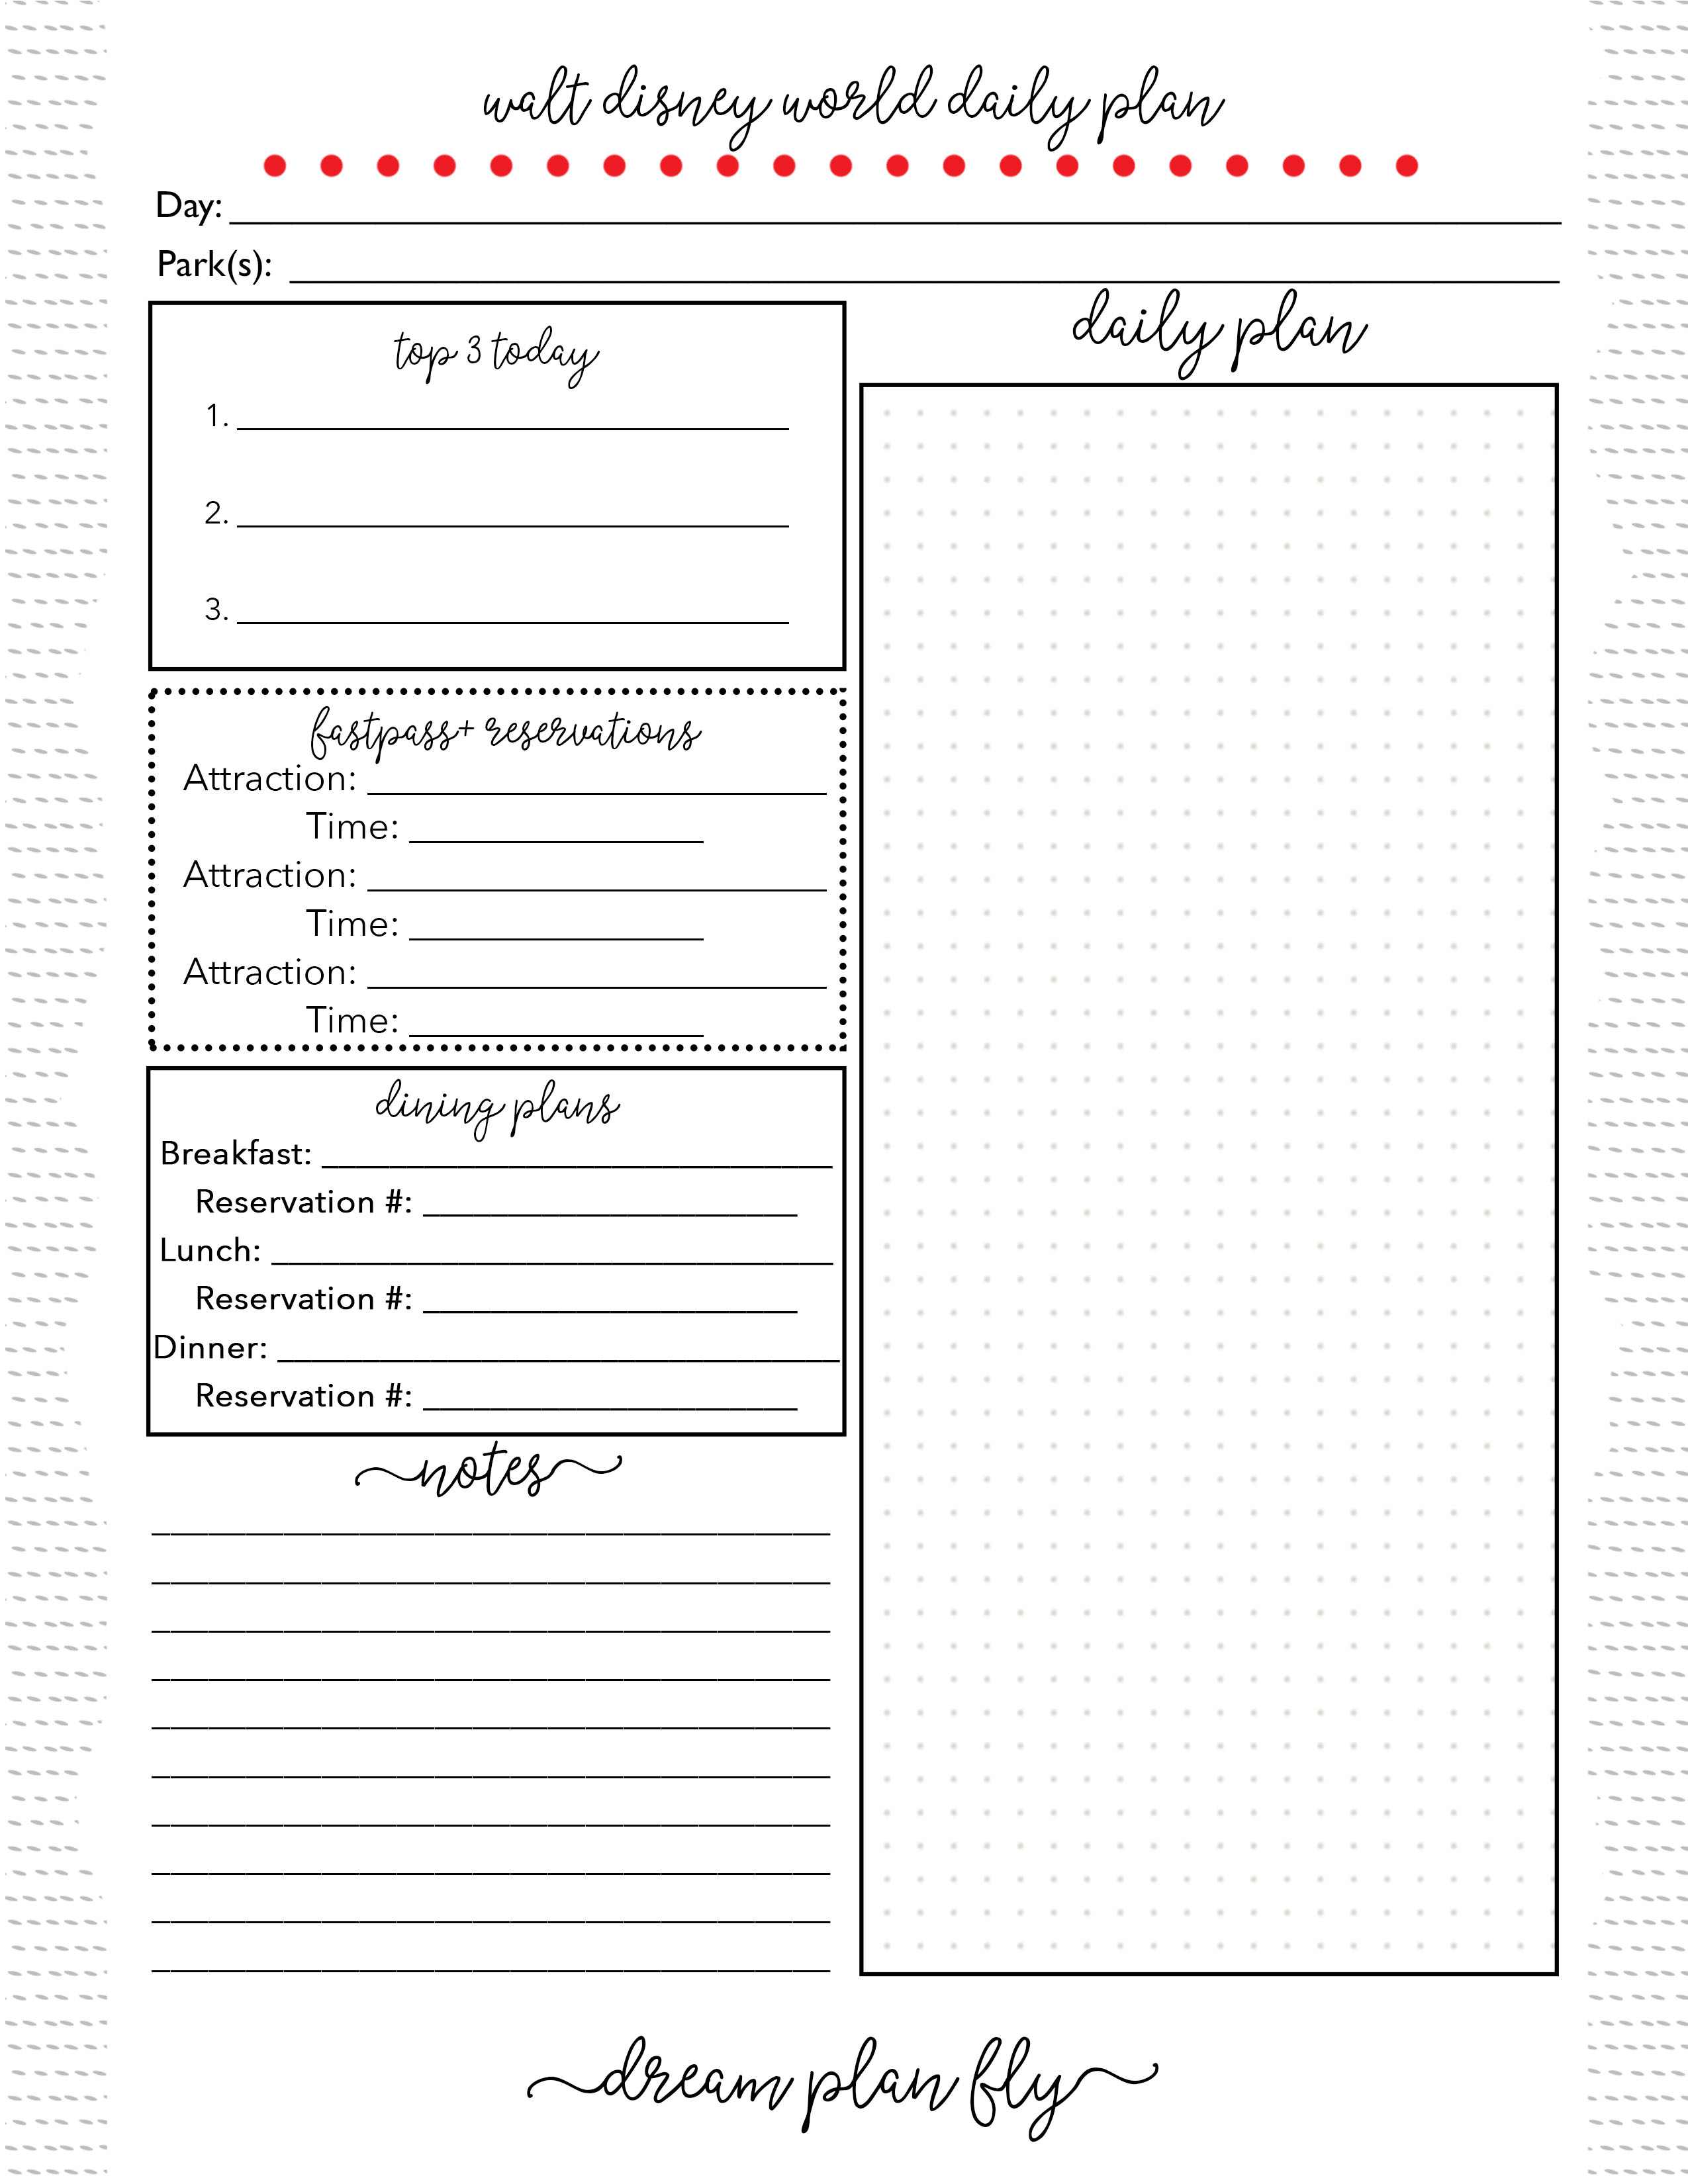 Free Printable Daily Planner For Walt Disney World Dream Plan Fly